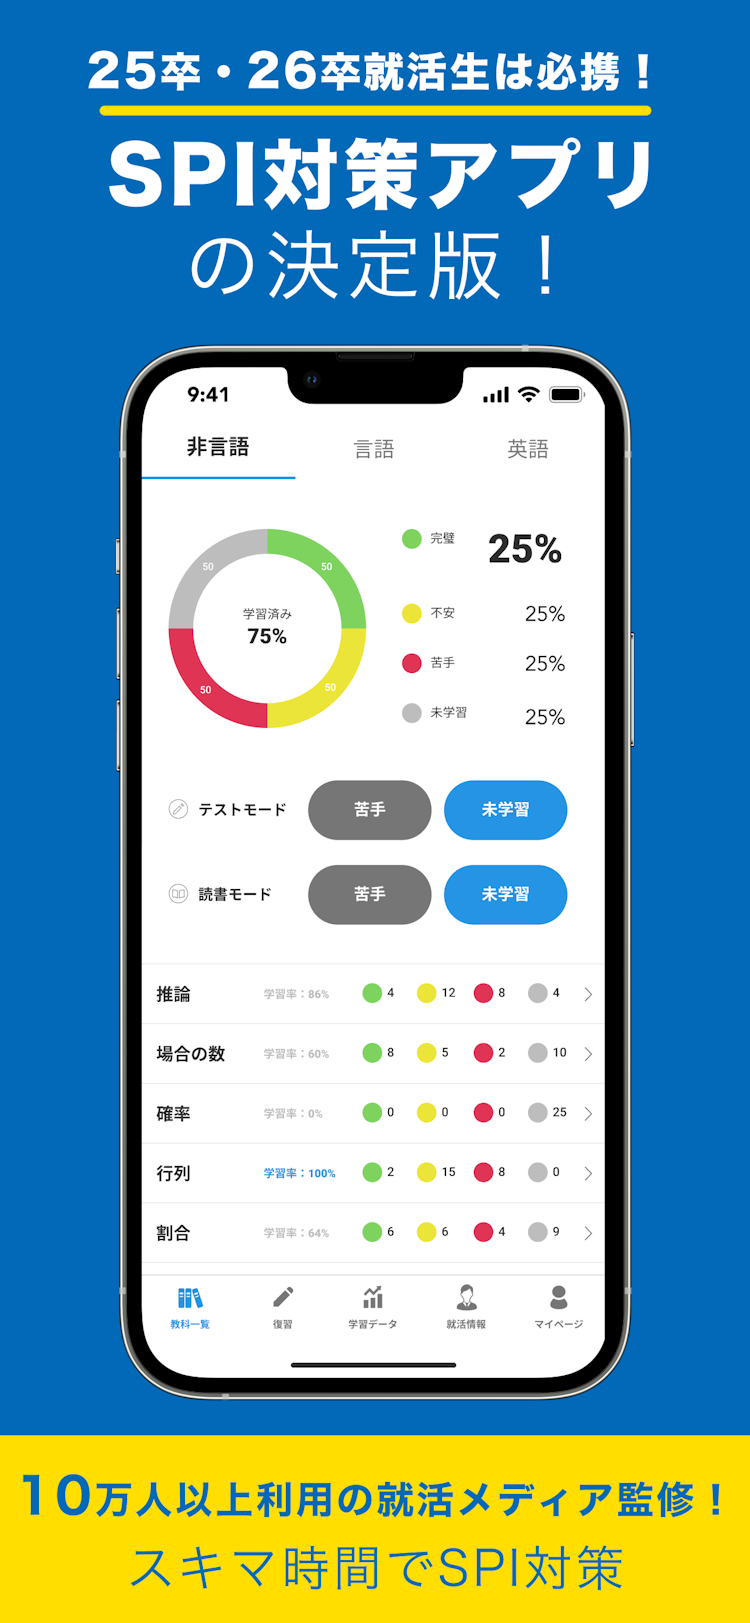 SPI対策アプリ「SPI対策問題集 produced by CareerMine」